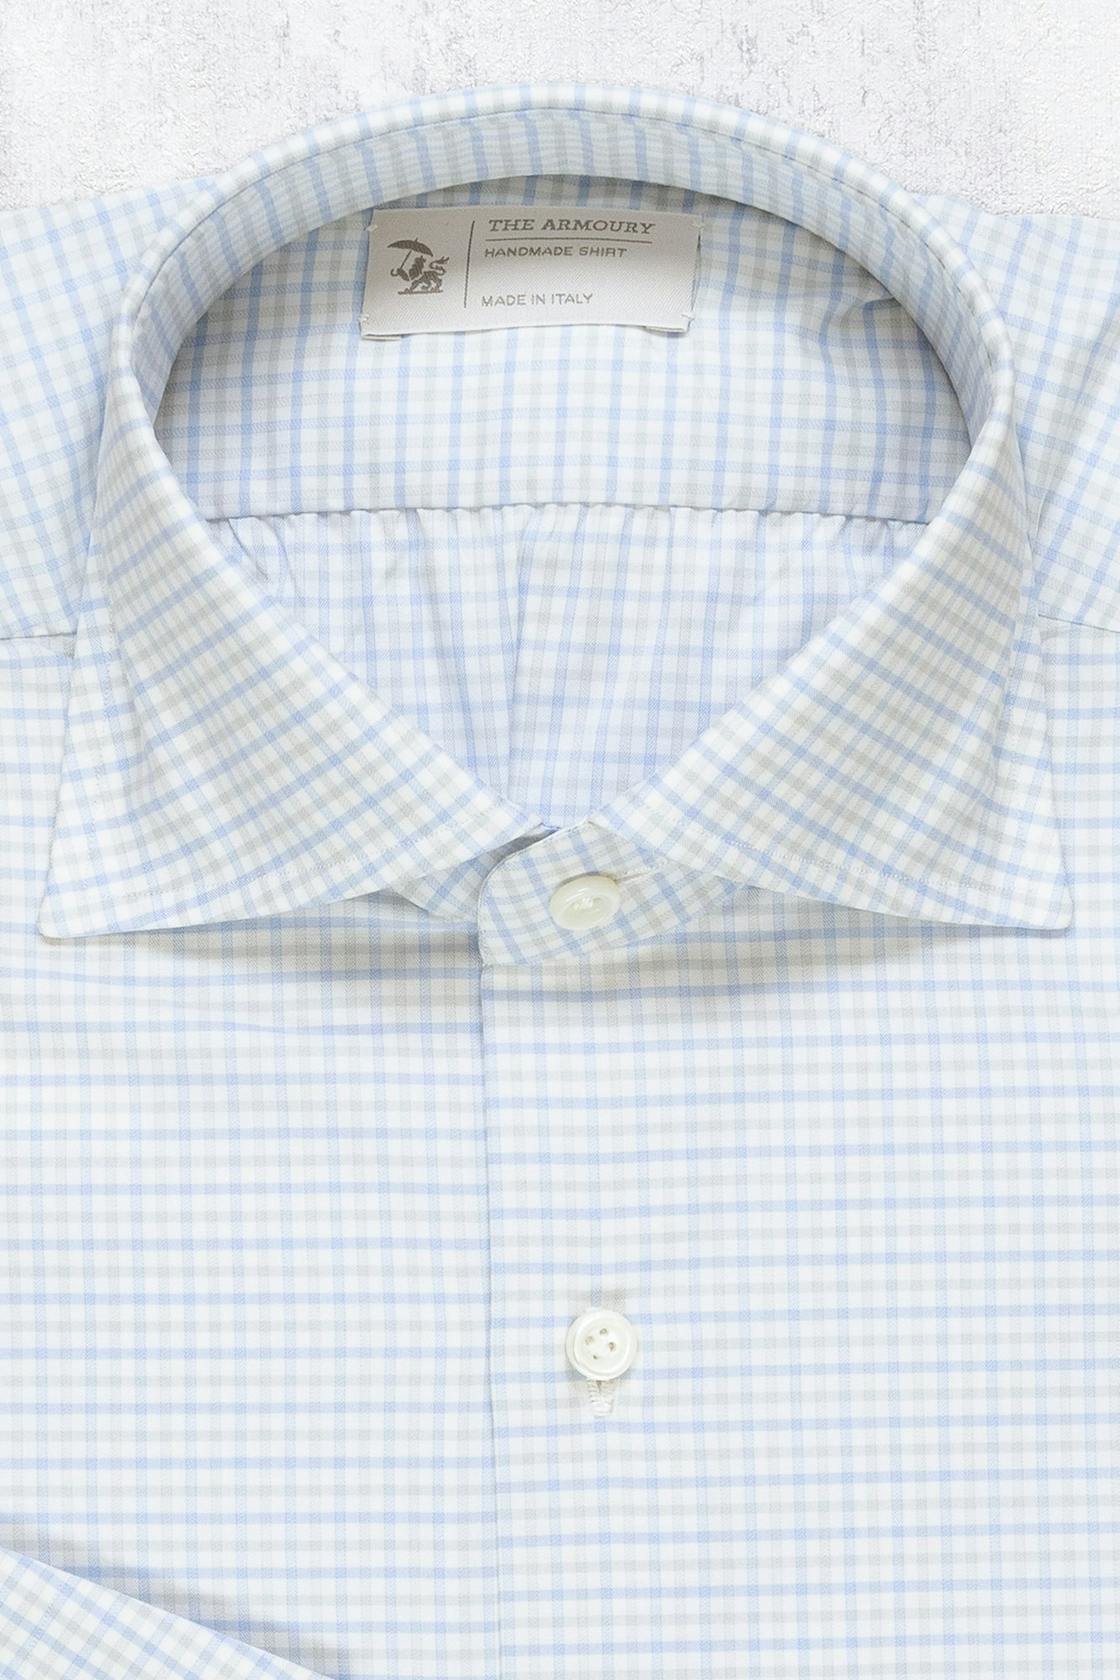 The Armoury Blue Grey Twill Check Cotton Spread Collar Shirt